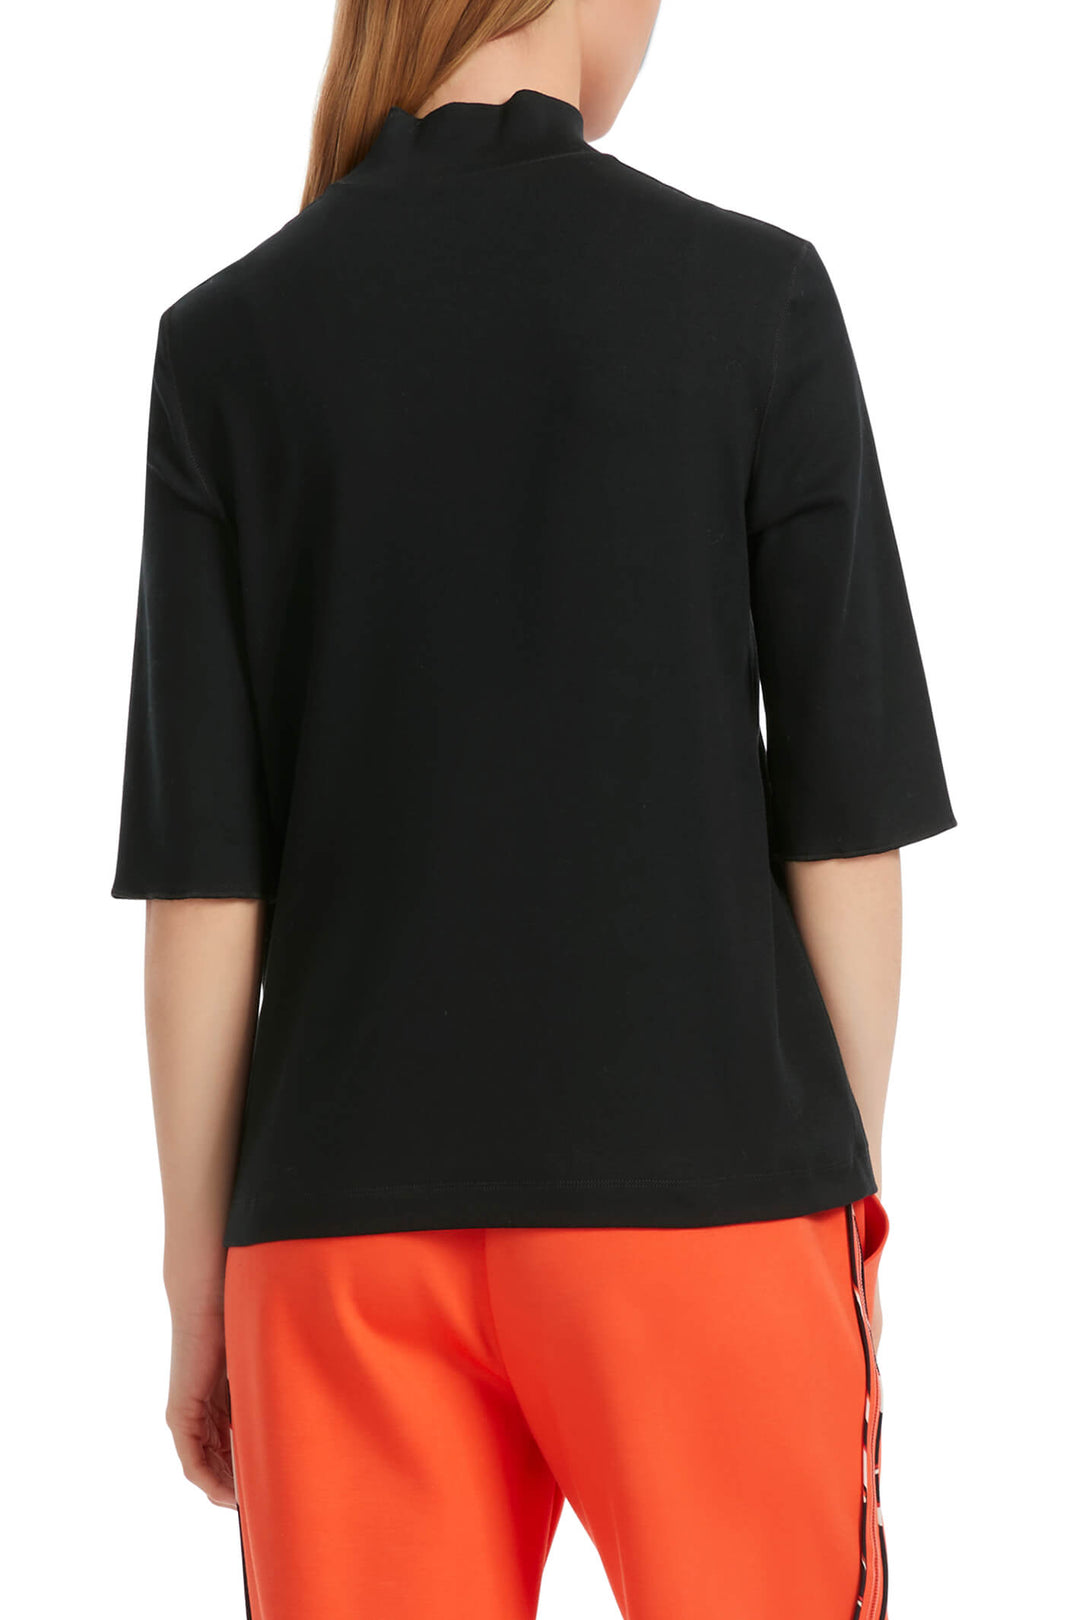 Marc Cain Sports VS 48.06 J27 900 Black High Neck Short Sleeve Top - Olivia Grace Fashion